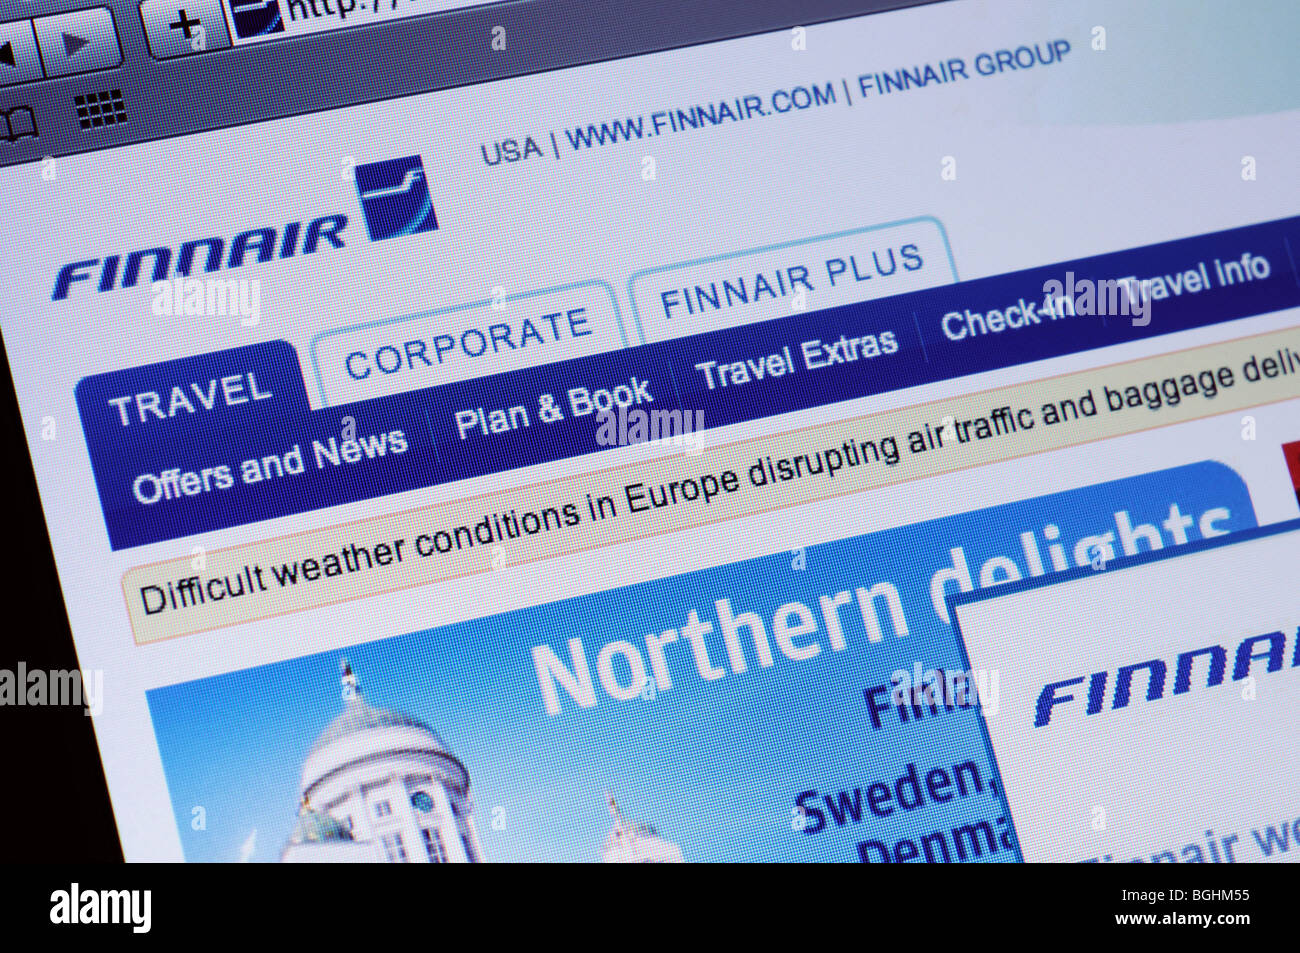 Finnair Stock